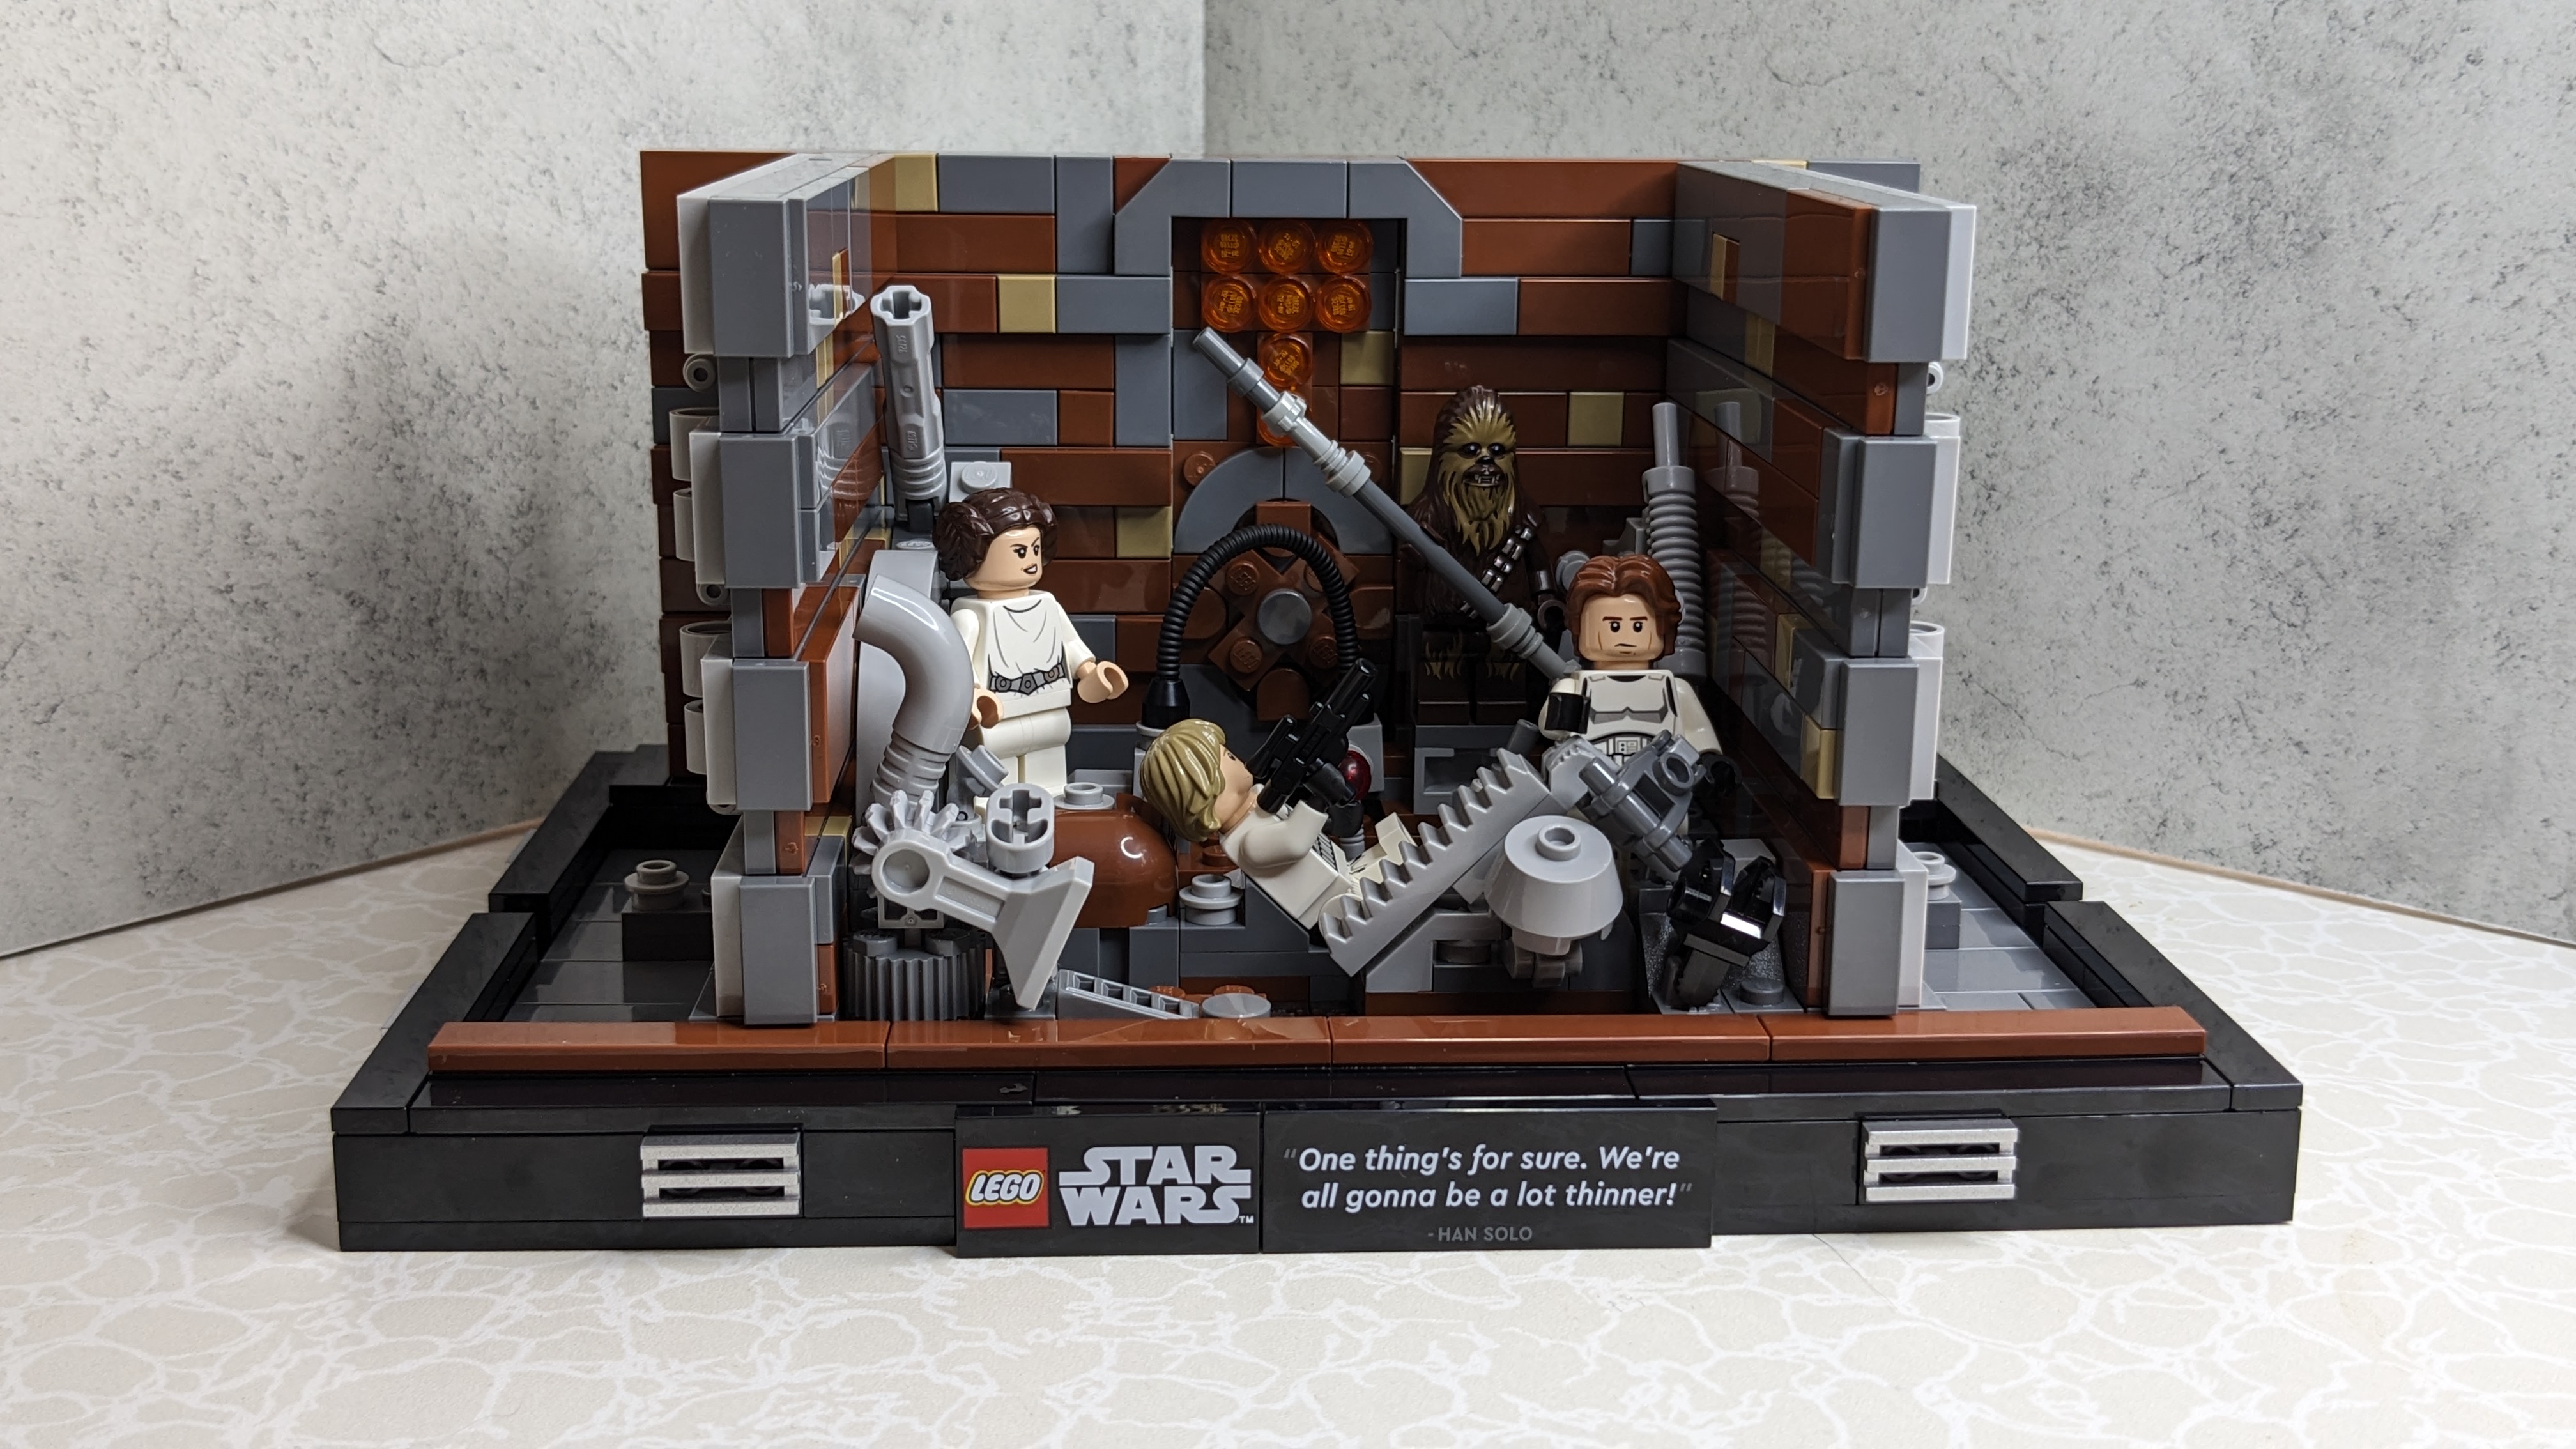 LEGO Death Star Han Solo Minifigure